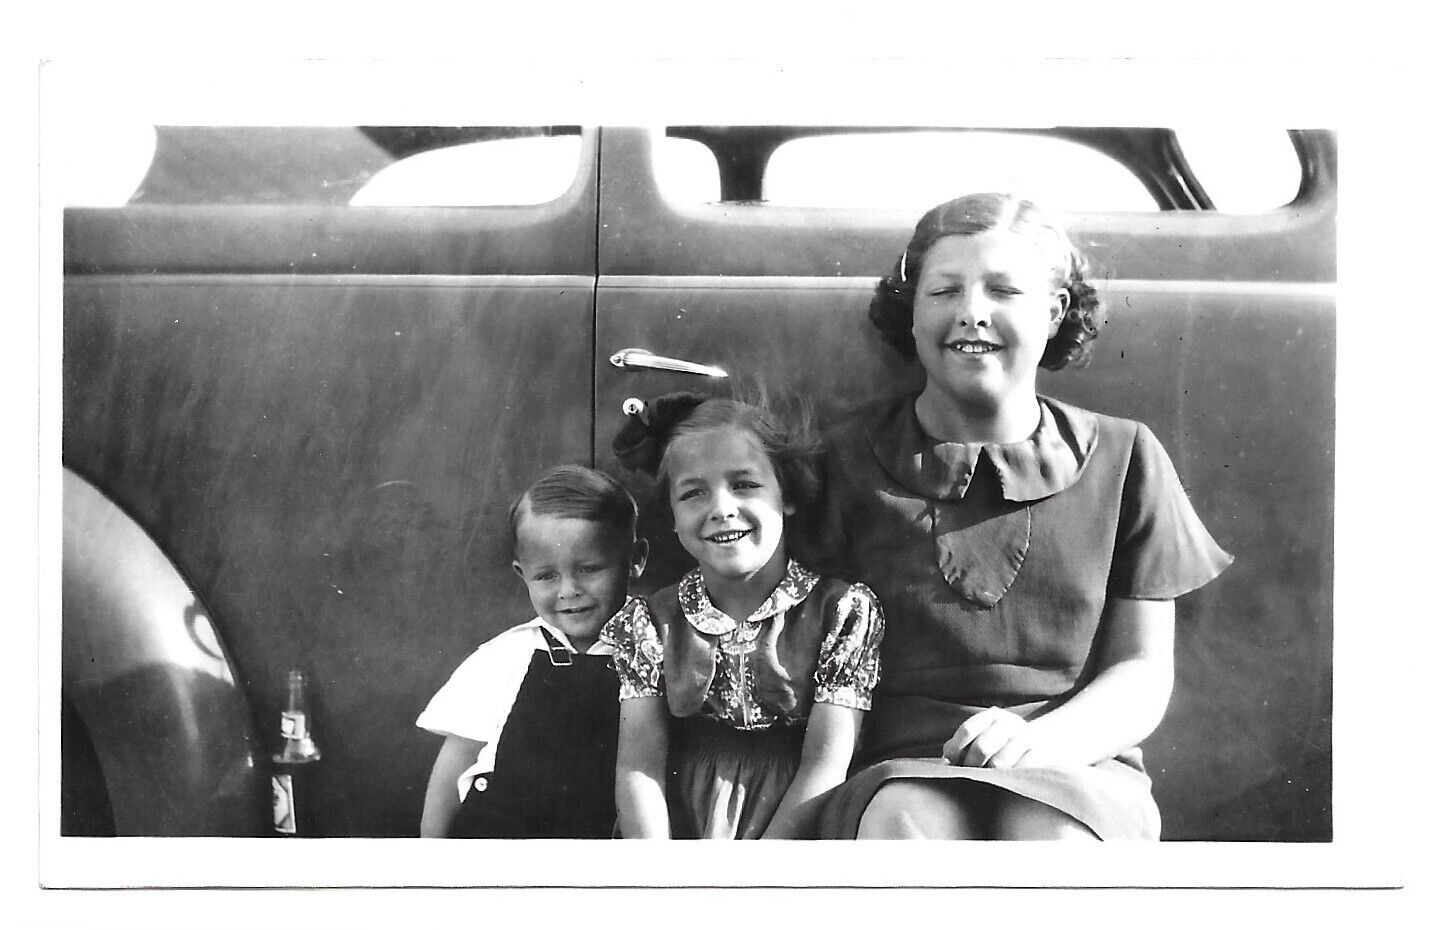 Eyes Closed Children, Great Expression, Vintage Snapshot Photo